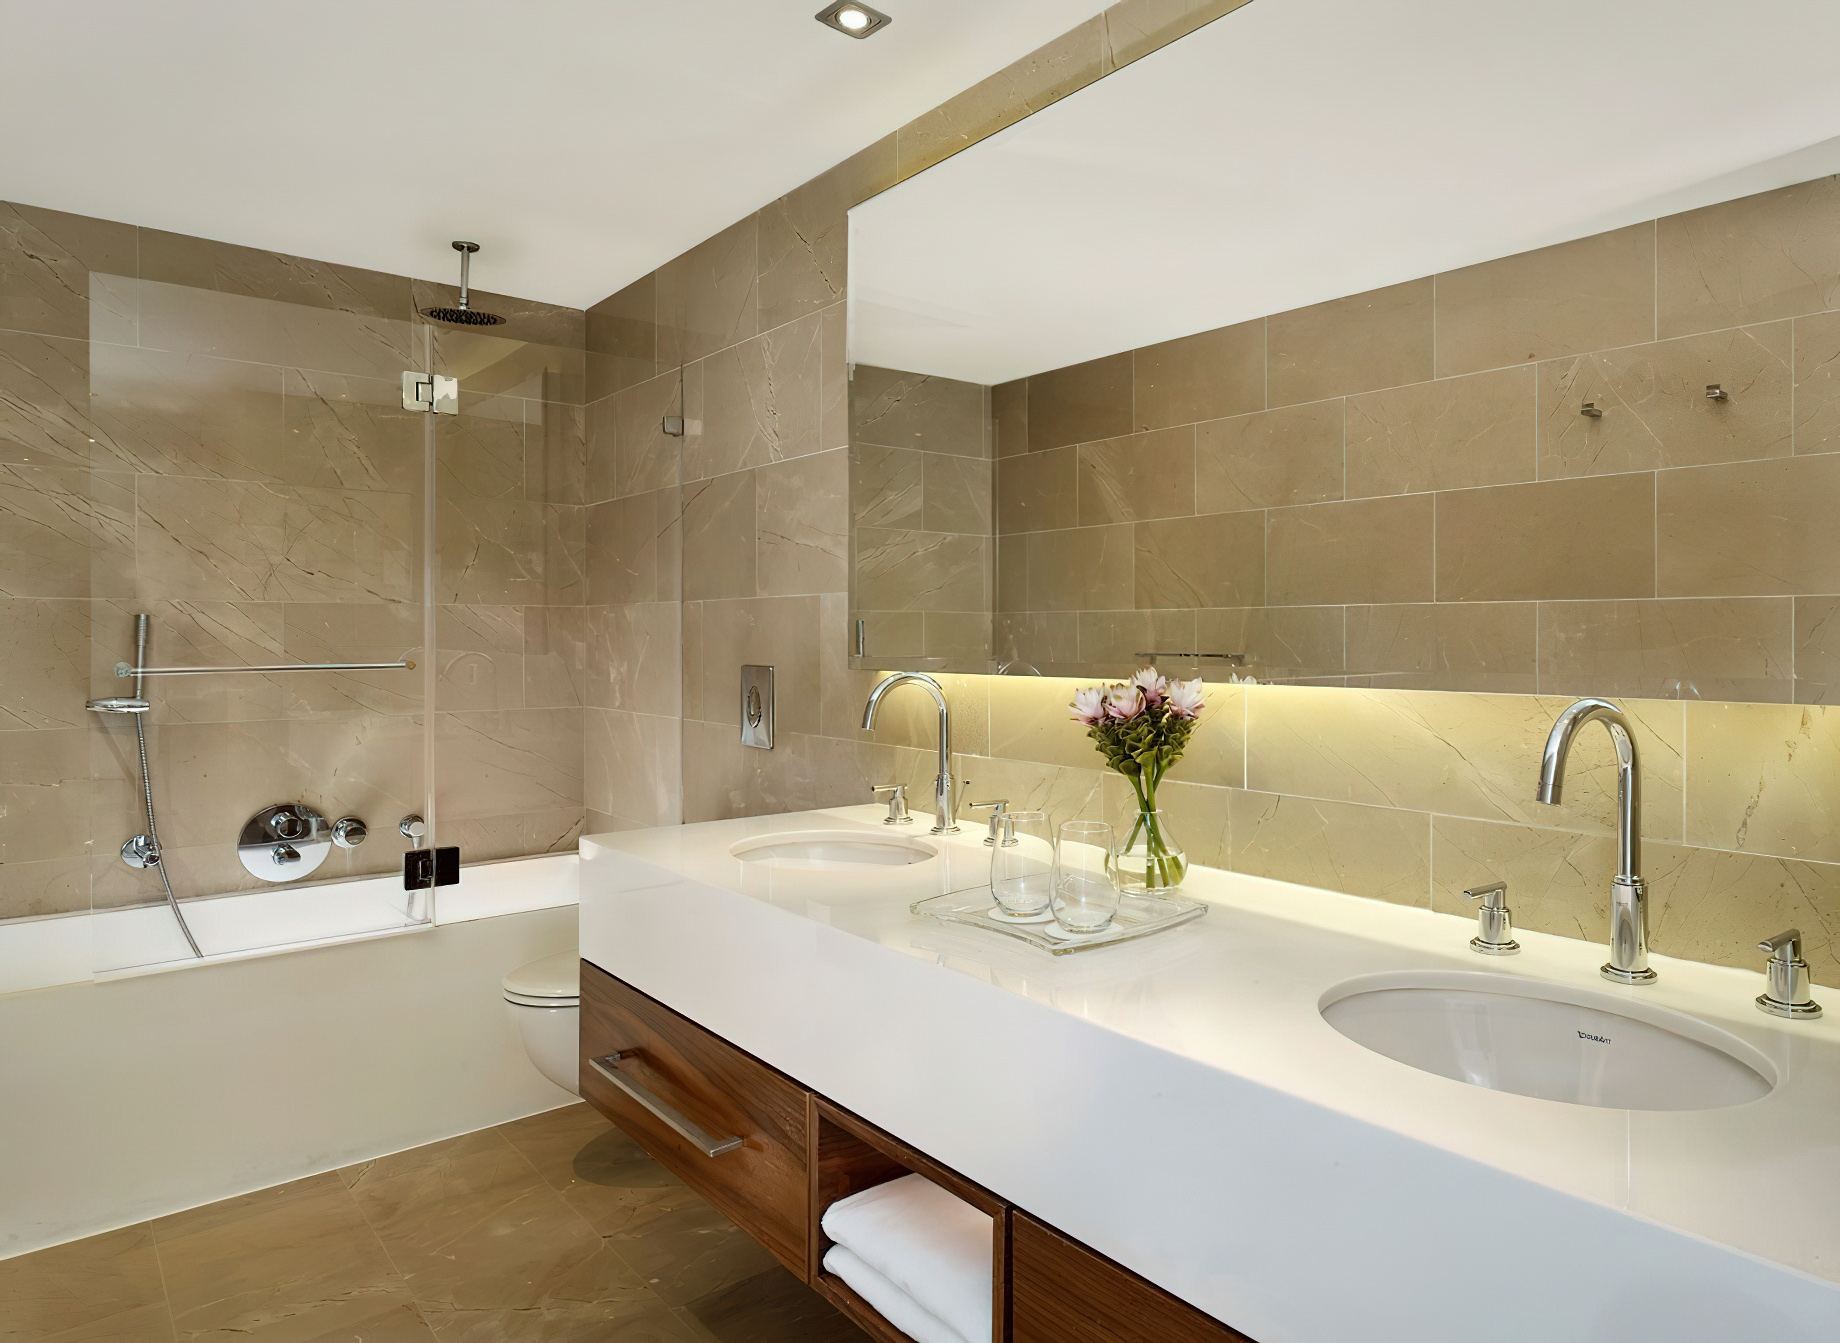 The Ritz-Carlton, Herzliya Hotel – Herzliya, Israel – Duplex Suite Bathroom Vanity and Tub